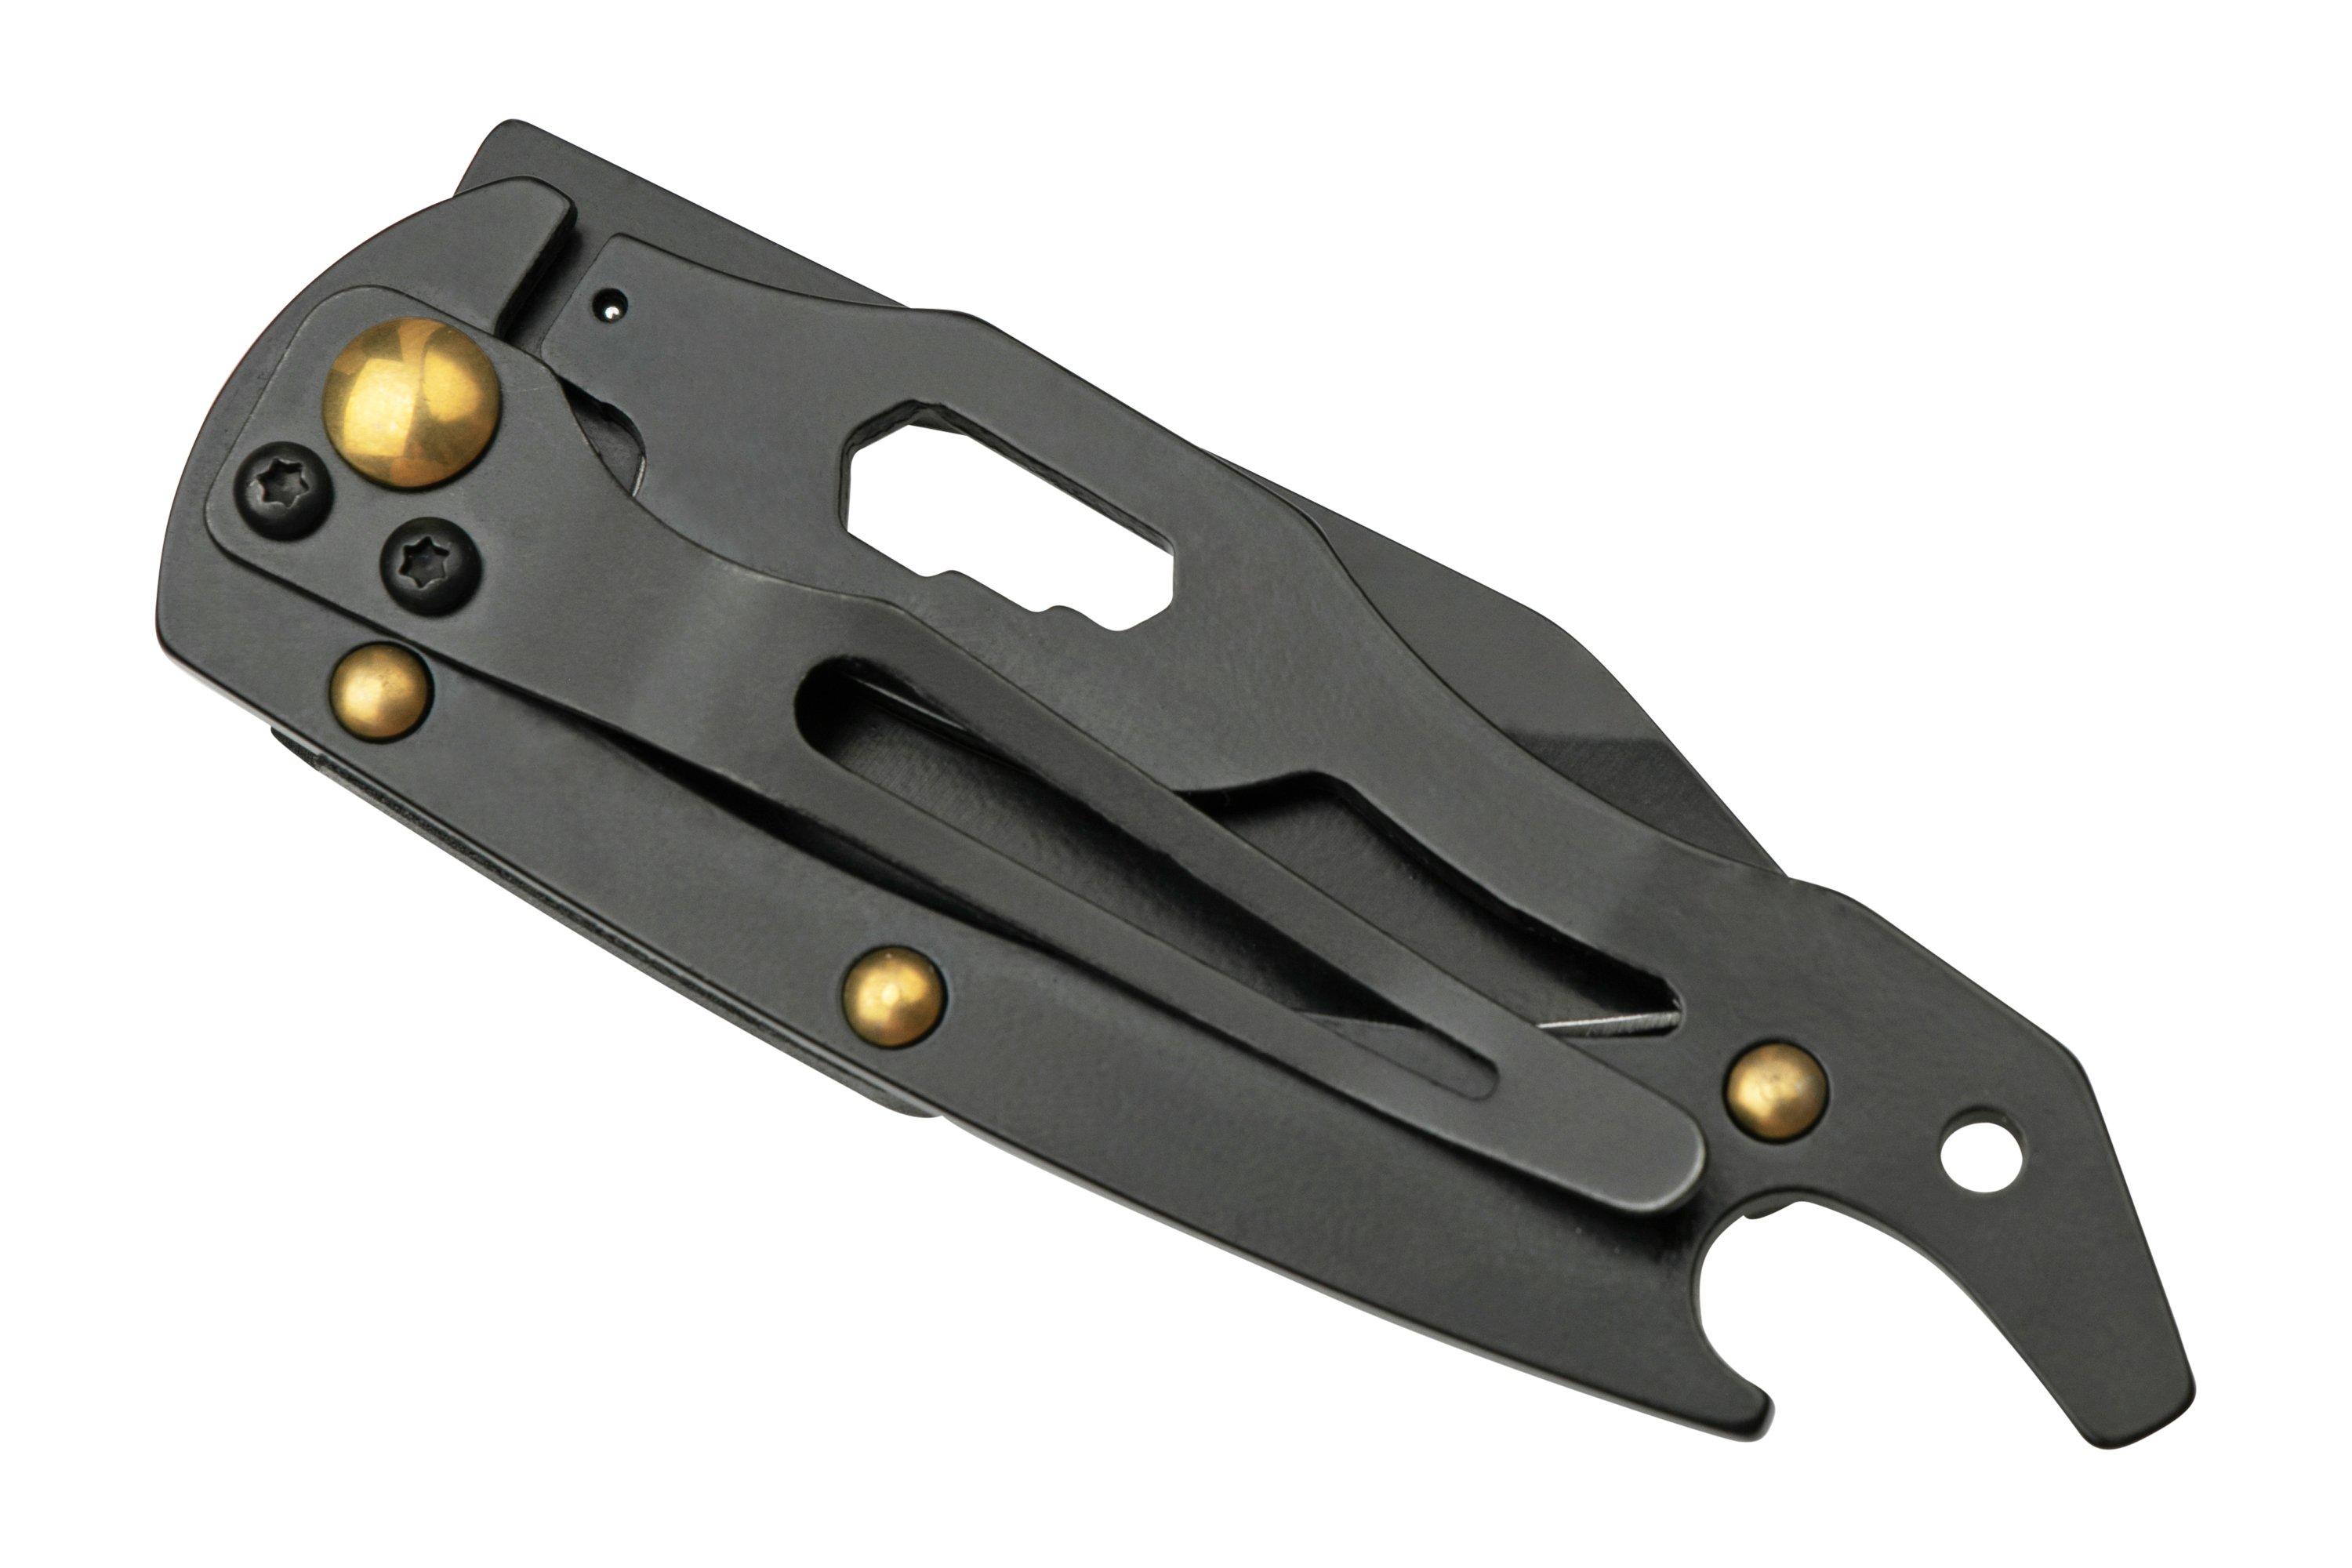 Smith & Wesson Multi-Tool Folding Knife 1136970 pocket knife ...